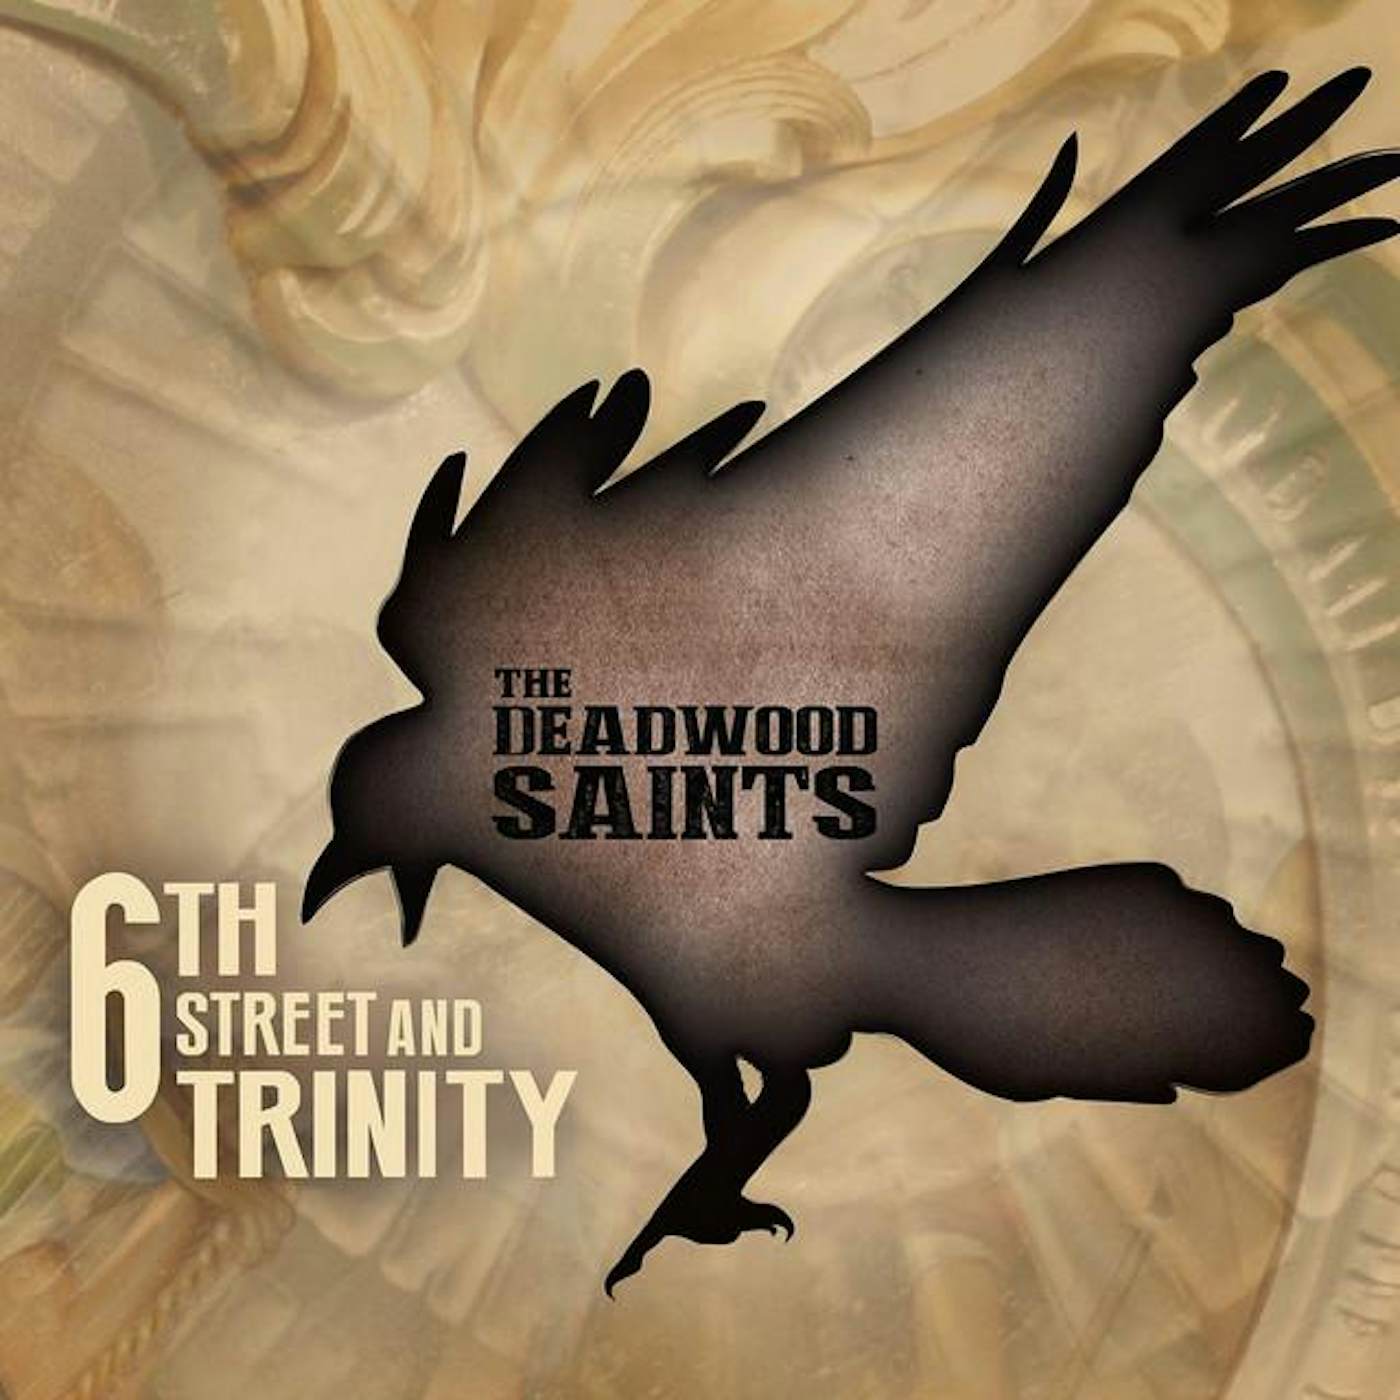 The Deadwood Saints